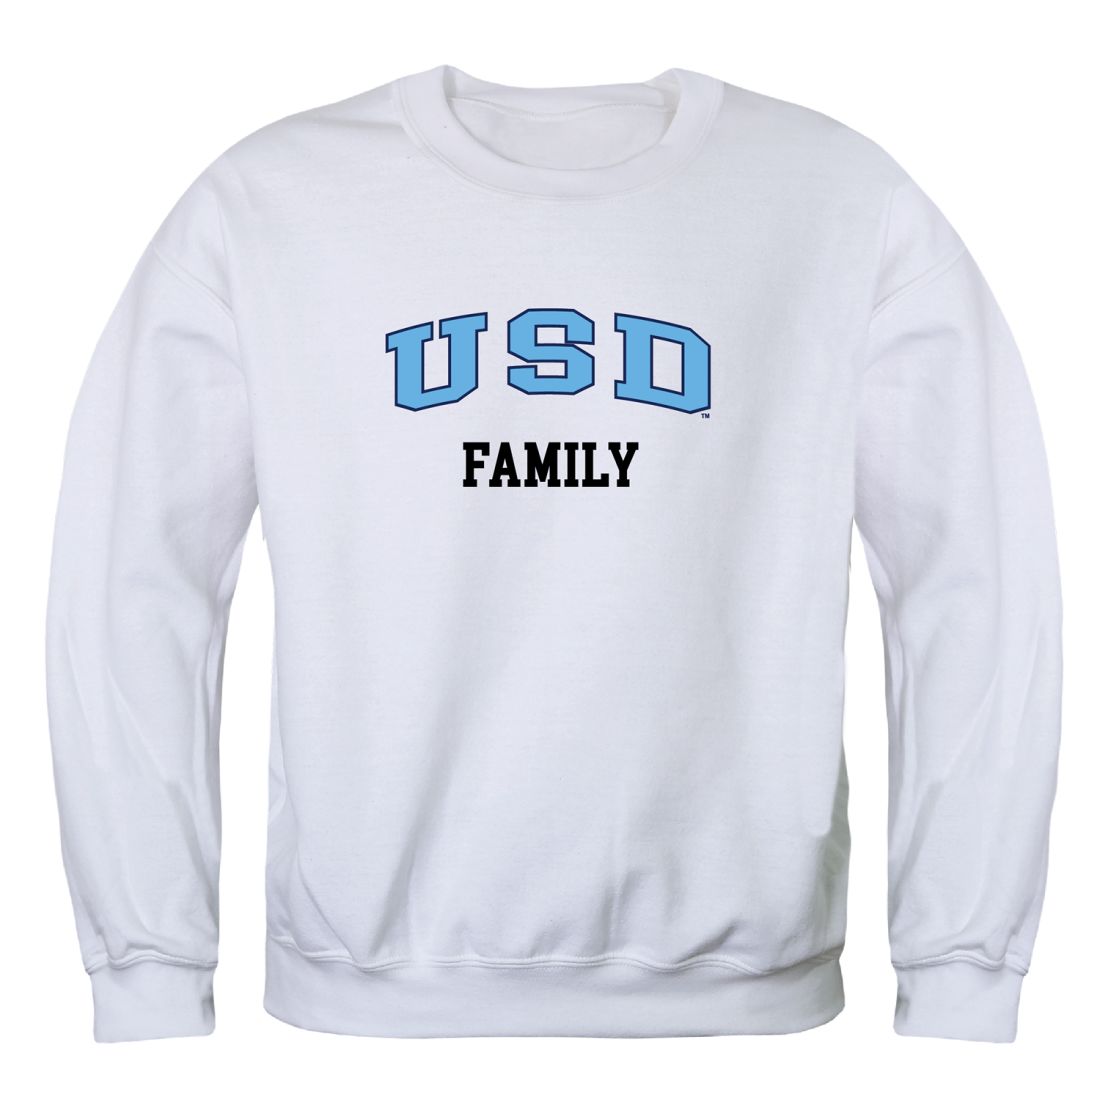 USD-University-of-San-Diego-Toreros-Family-Fleece-Crewneck-Pullover-Sweatshirt